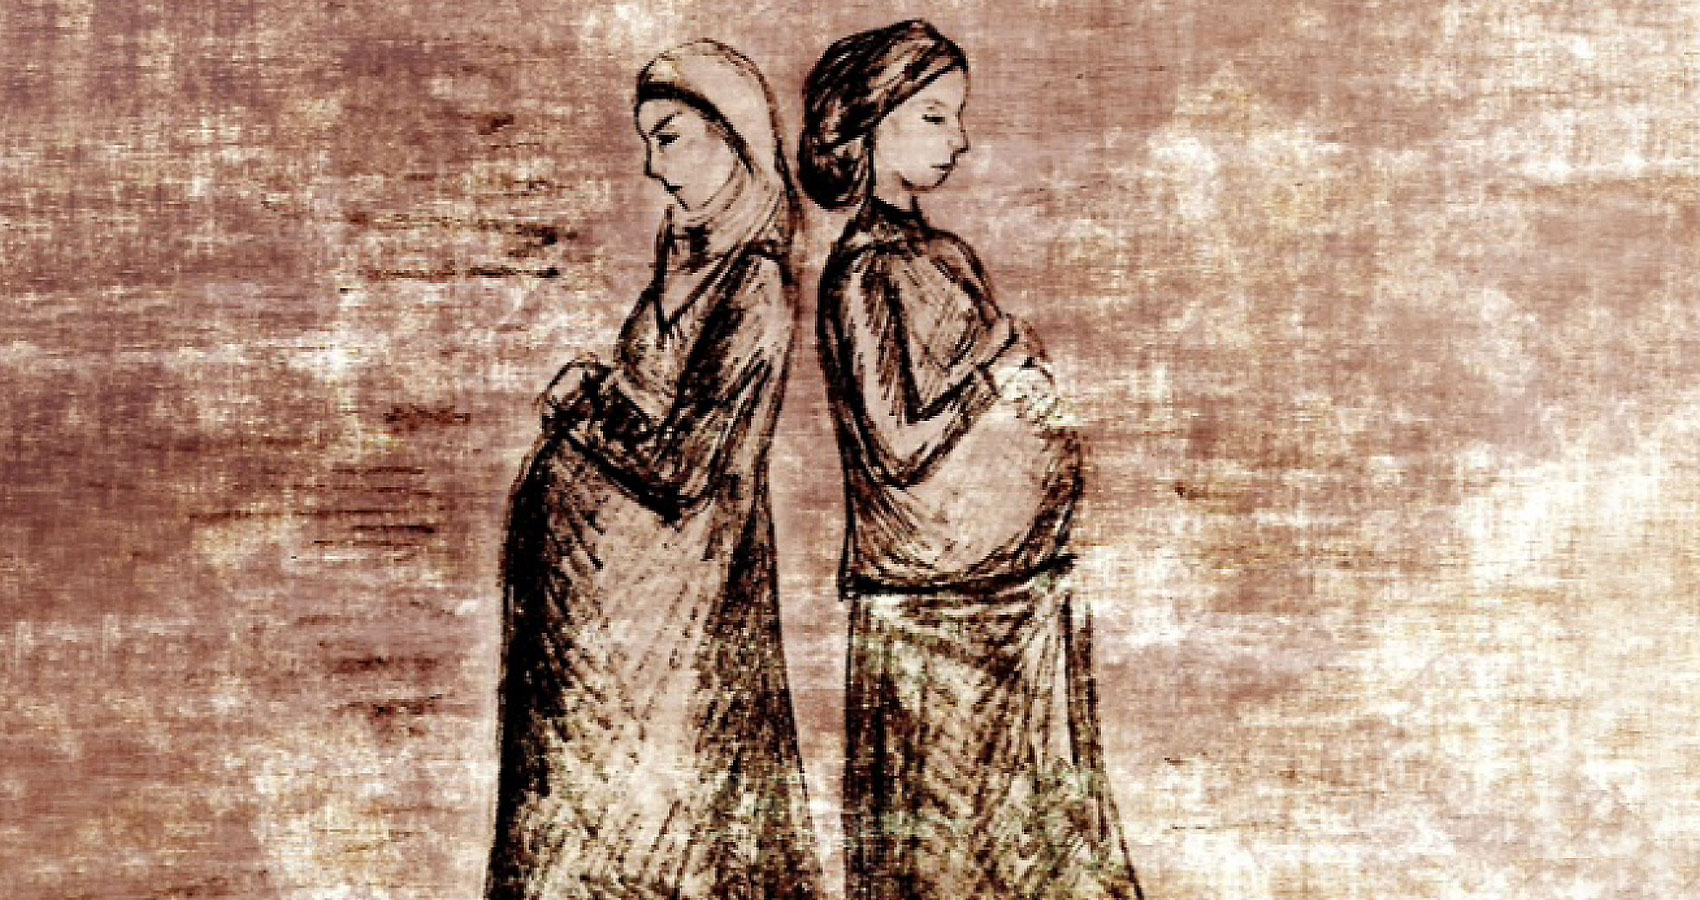 Qasim and Yeshua by Daniel S. Liuzzi at Spillwords.com